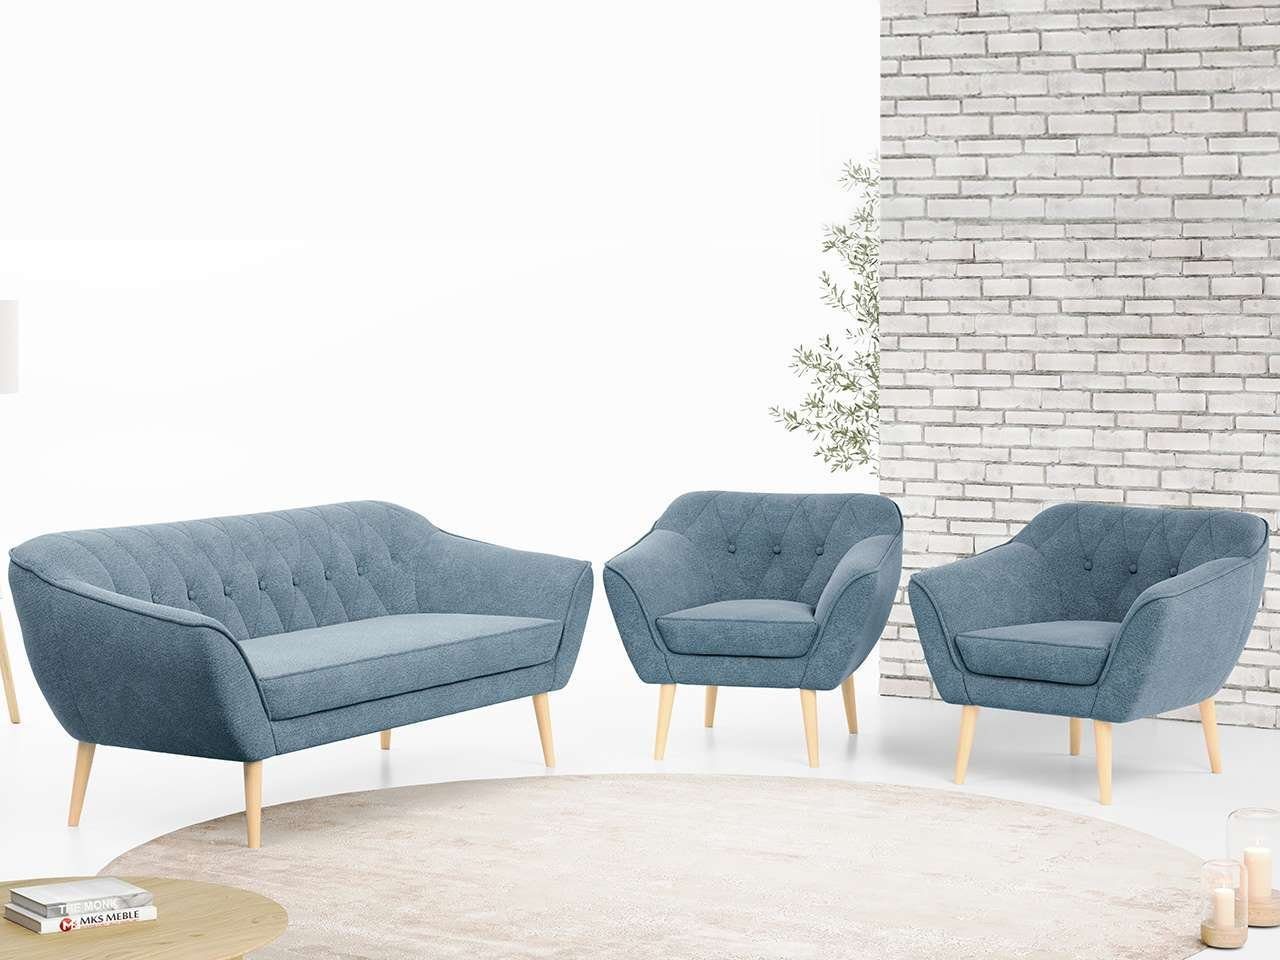 MKS MÖBEL Sofa PIRS 3 1 1, mit Relaxfunktion, Moderne Sofa Set, Skandinavische Deko Blau Matana